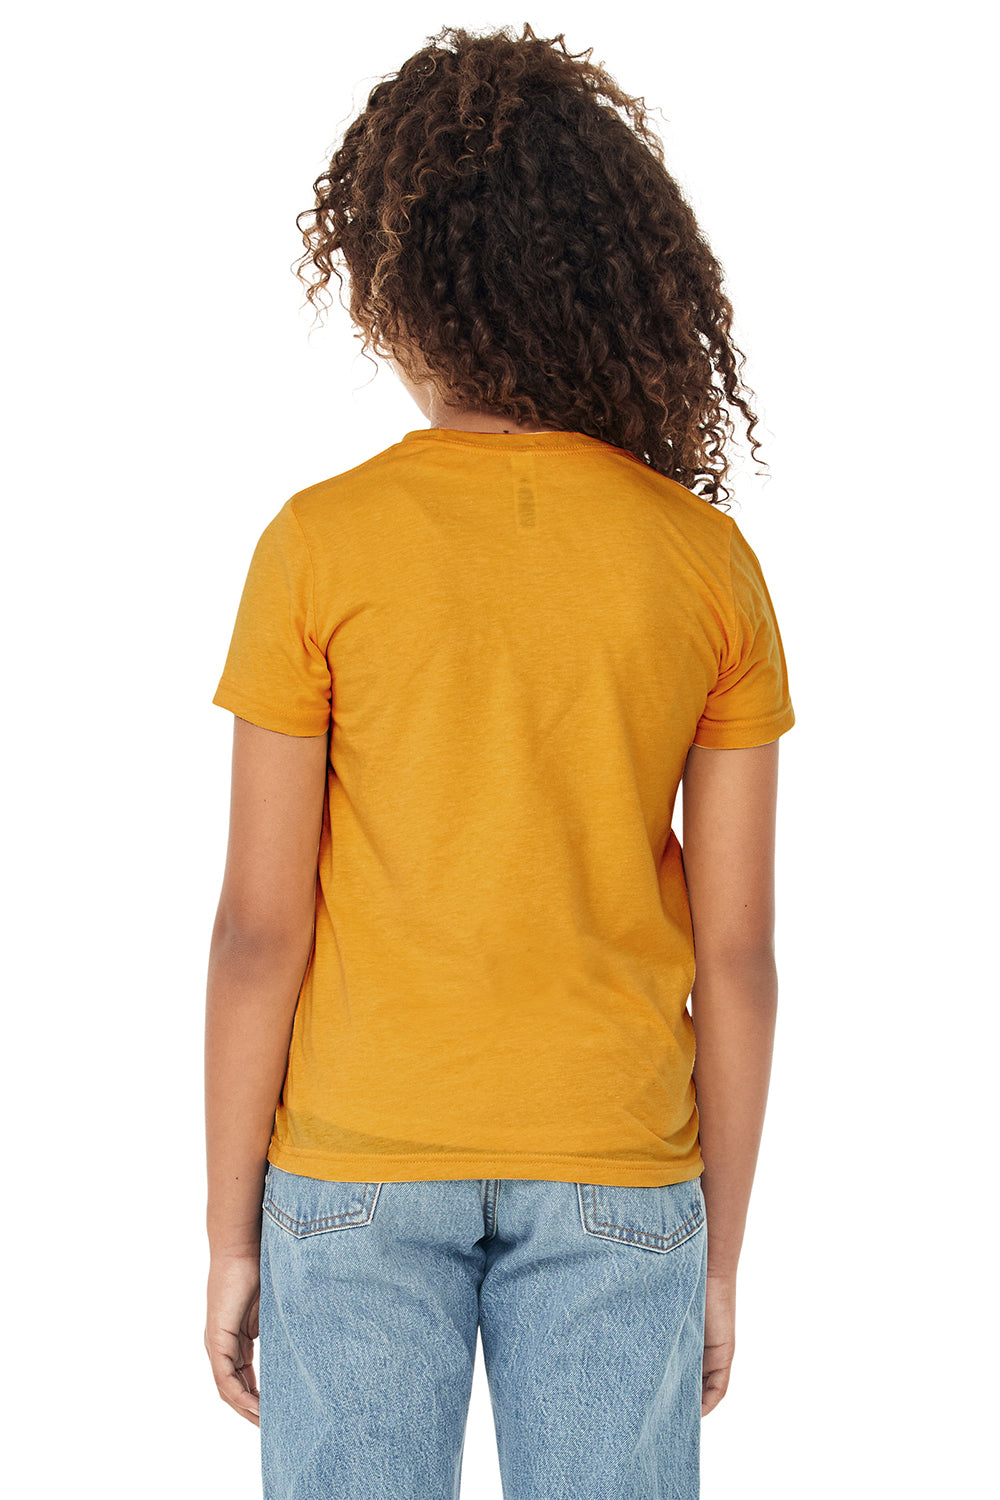 Bella + Canvas 3413Y Youth Short Sleeve Crewneck T-Shirt Mustard Yellow Model Back